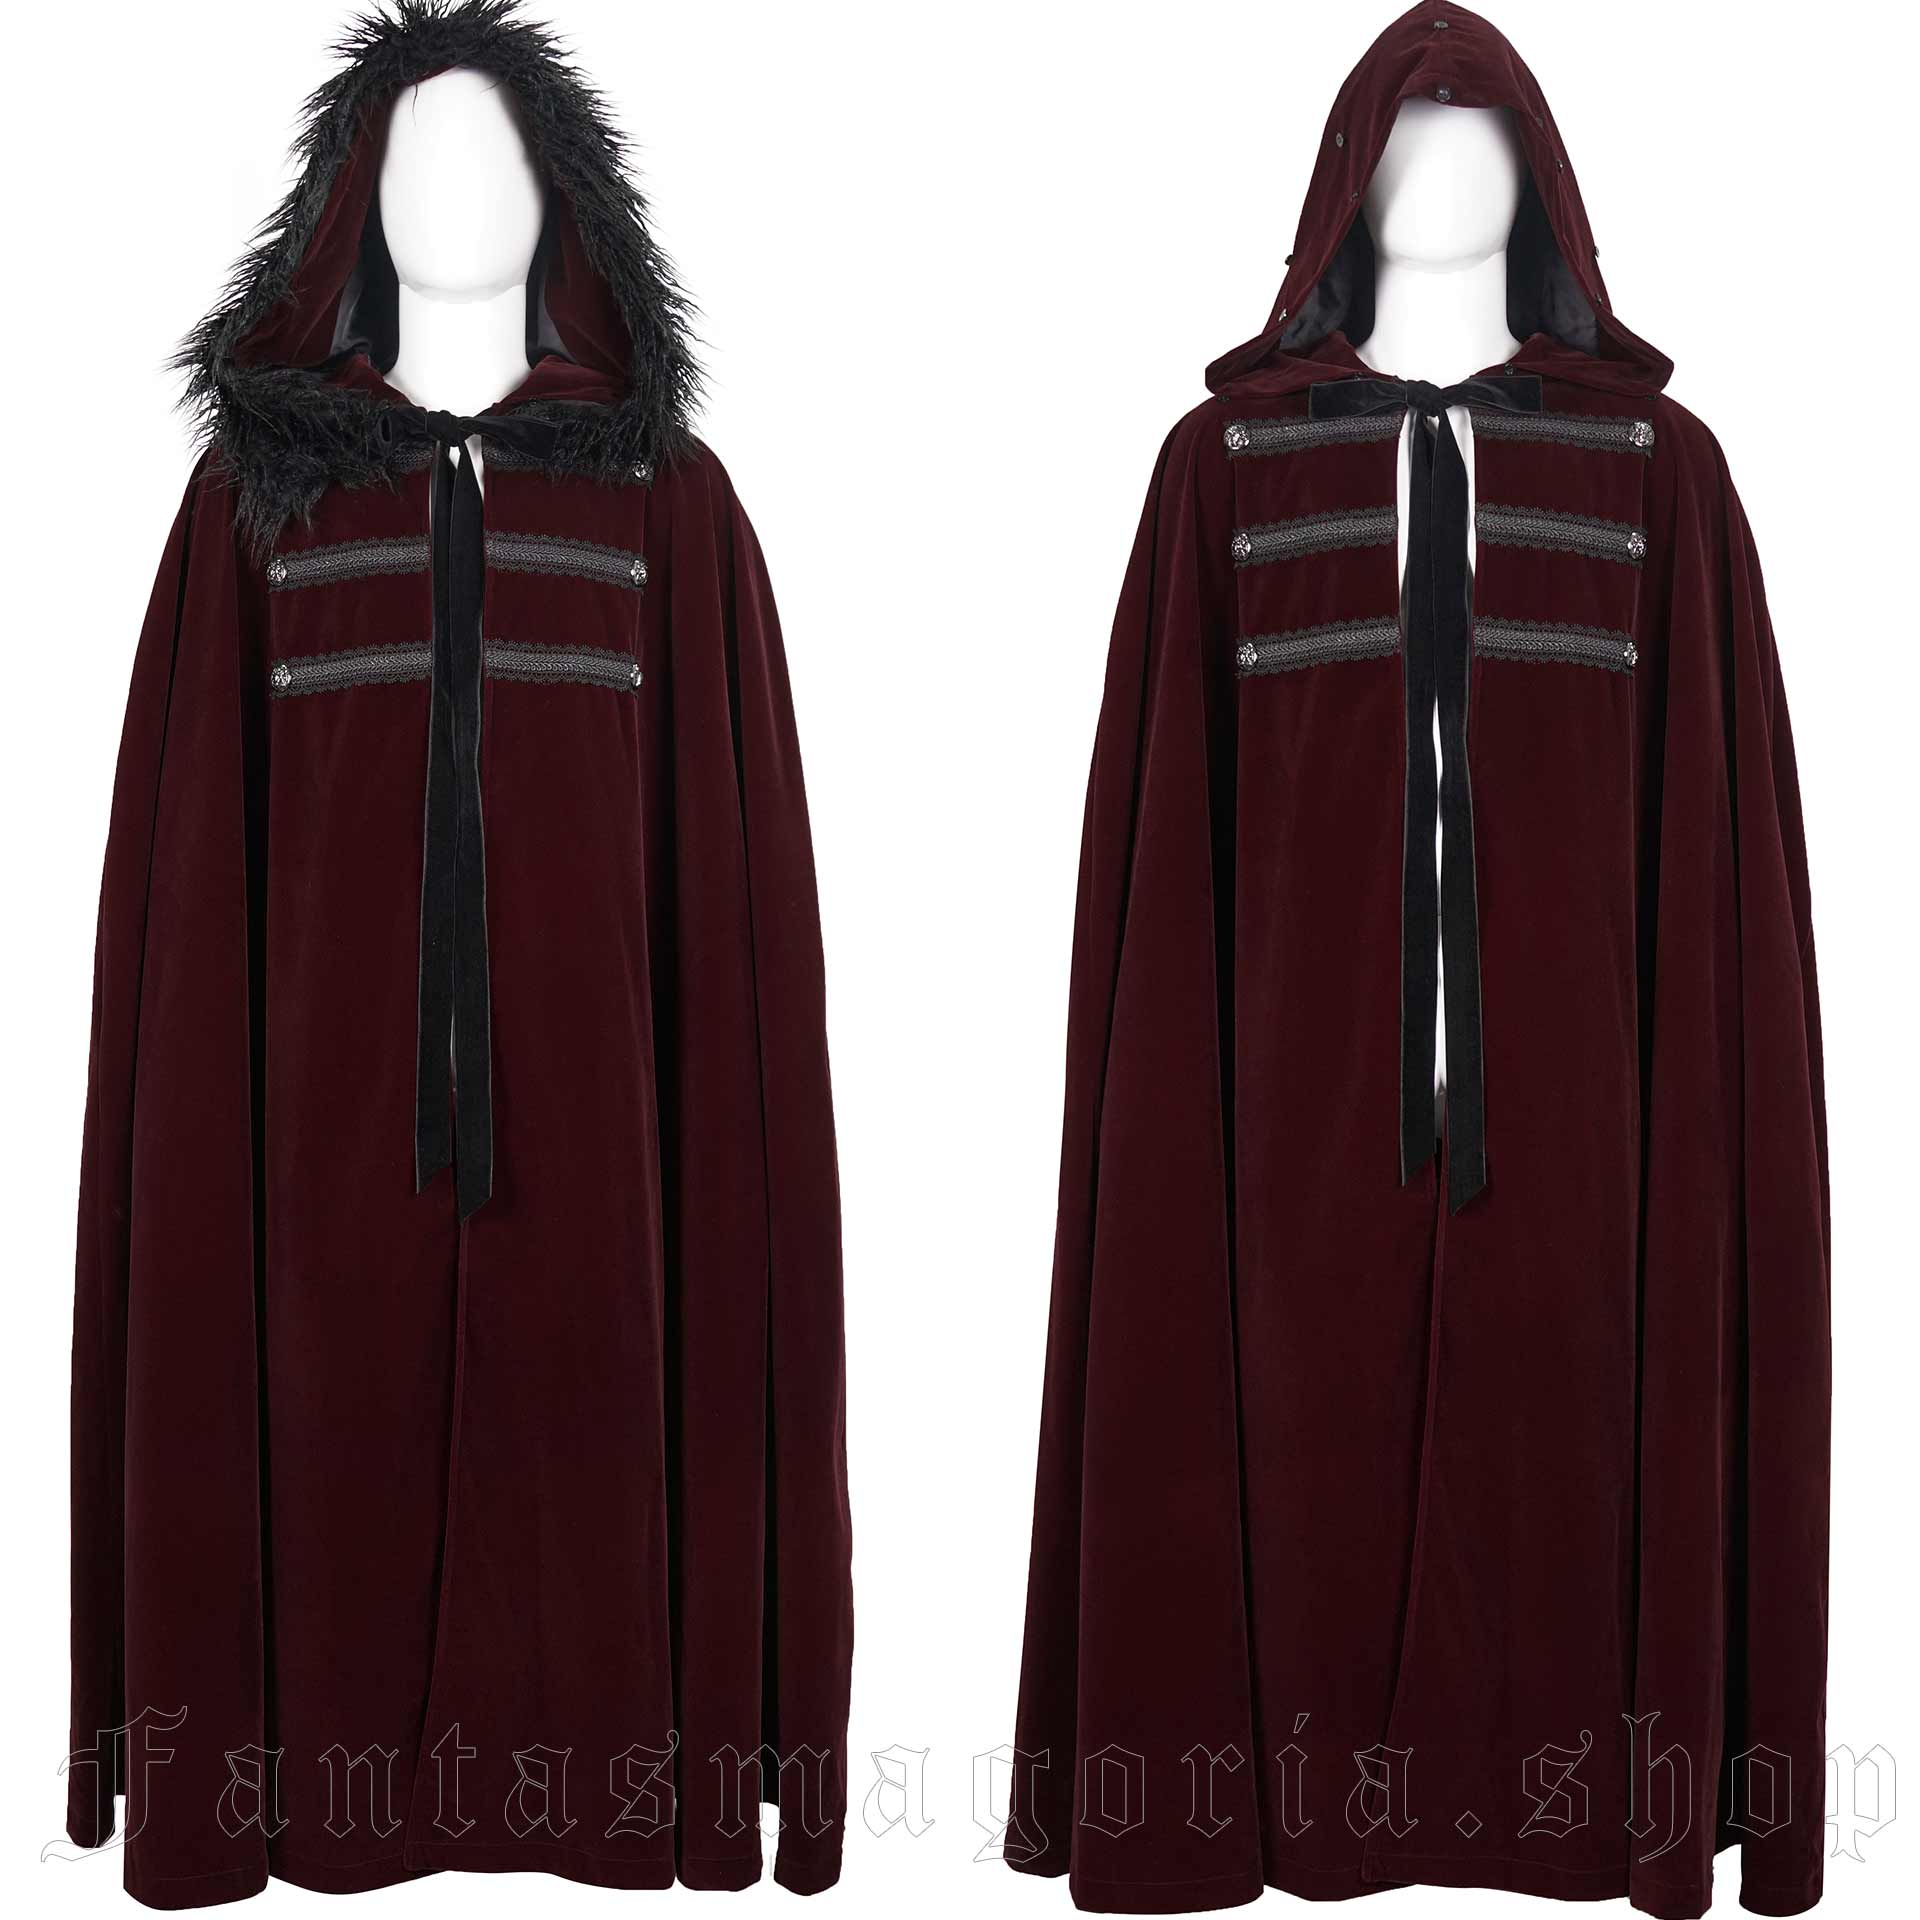 Grimoire Red Cloak CA02602/RD by Devil Fashion brand